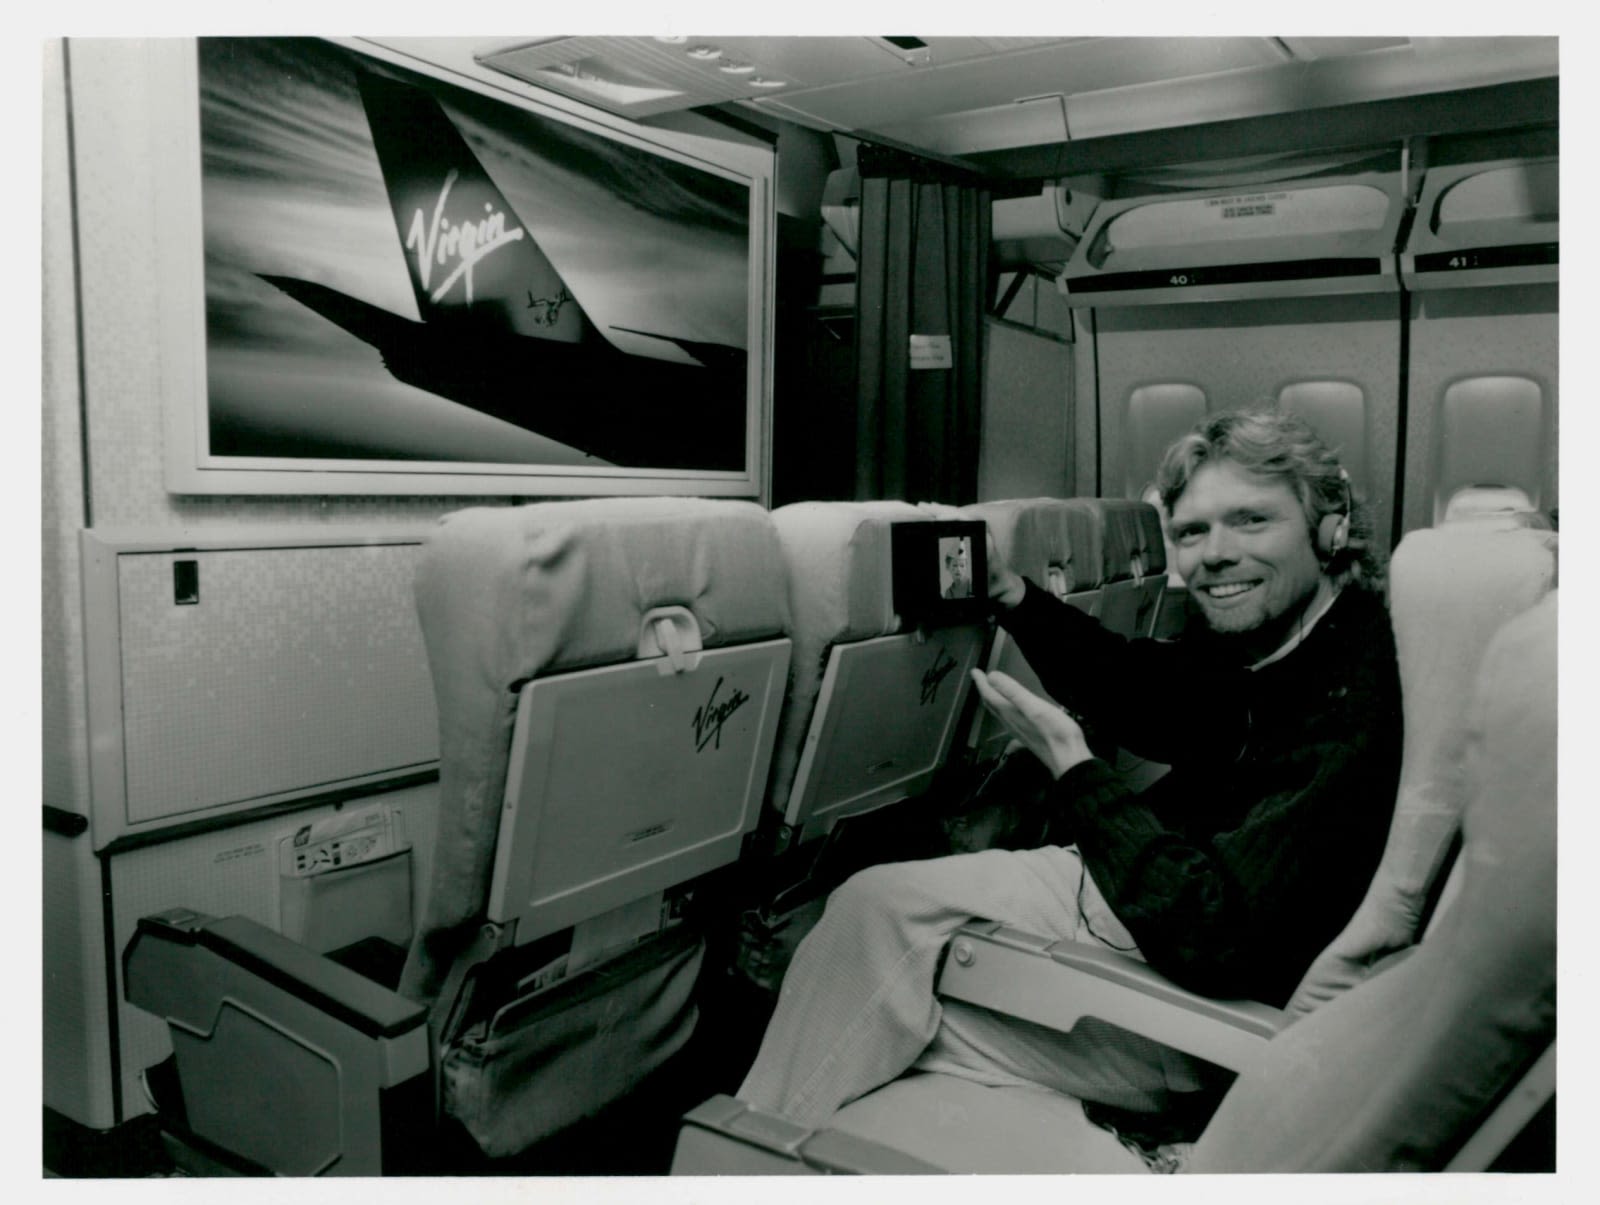 Richard Branson on a Virgin Atlantic plane with the first seatback entertainment screen